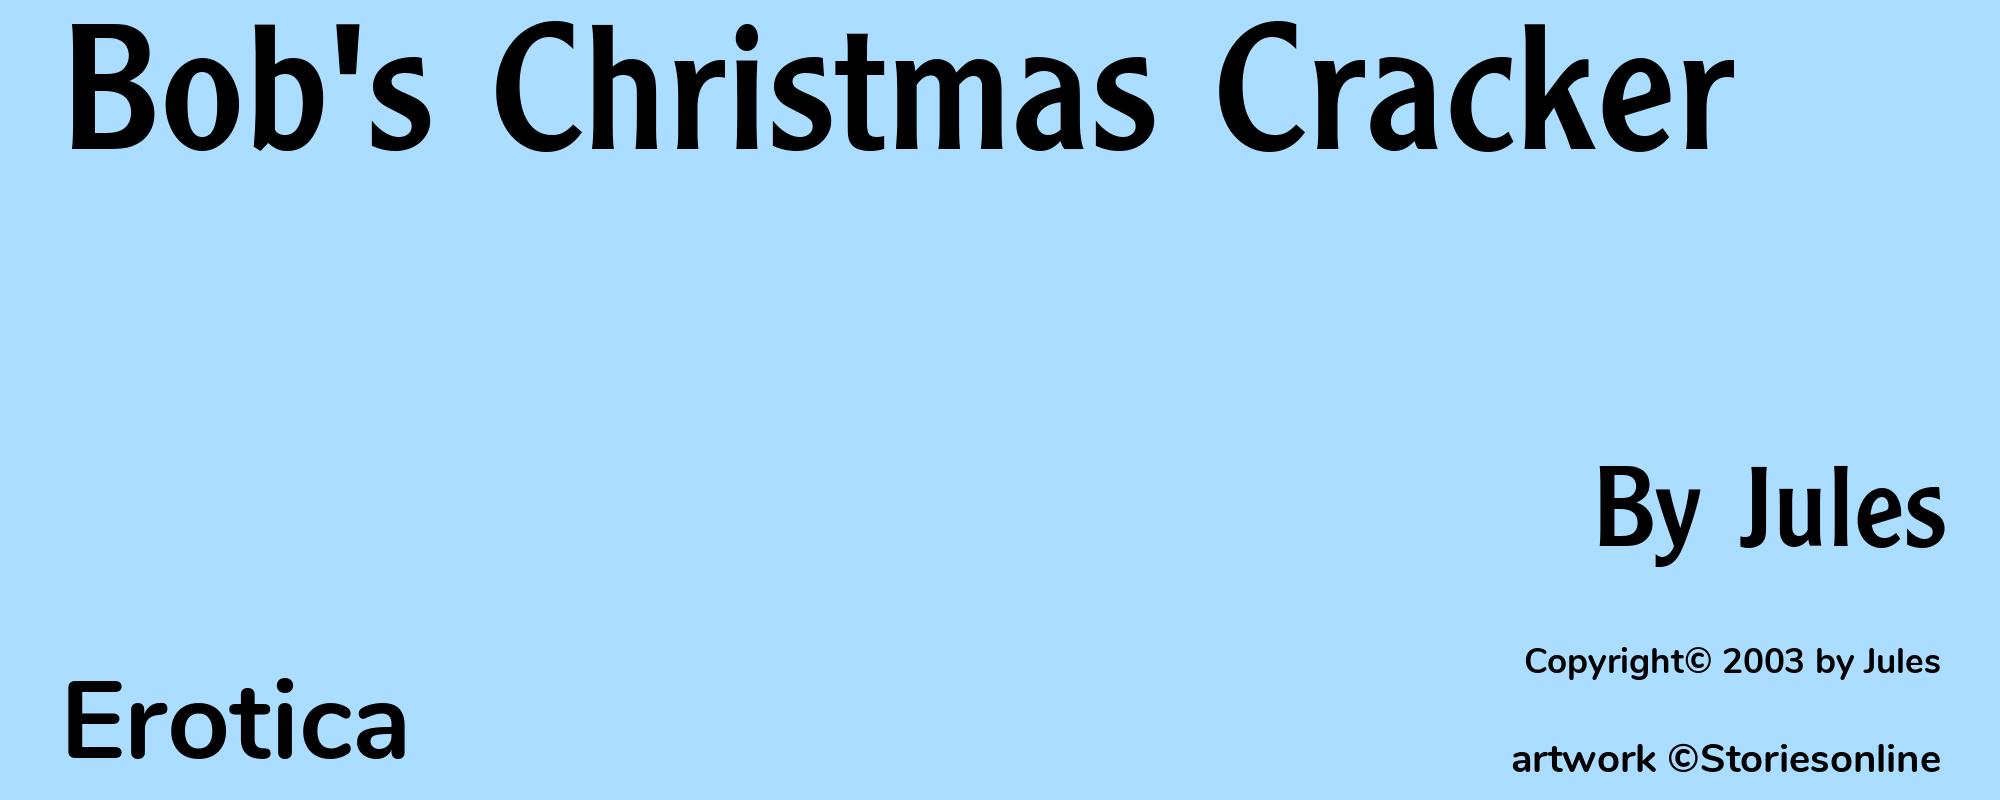 Bob's Christmas Cracker - Cover